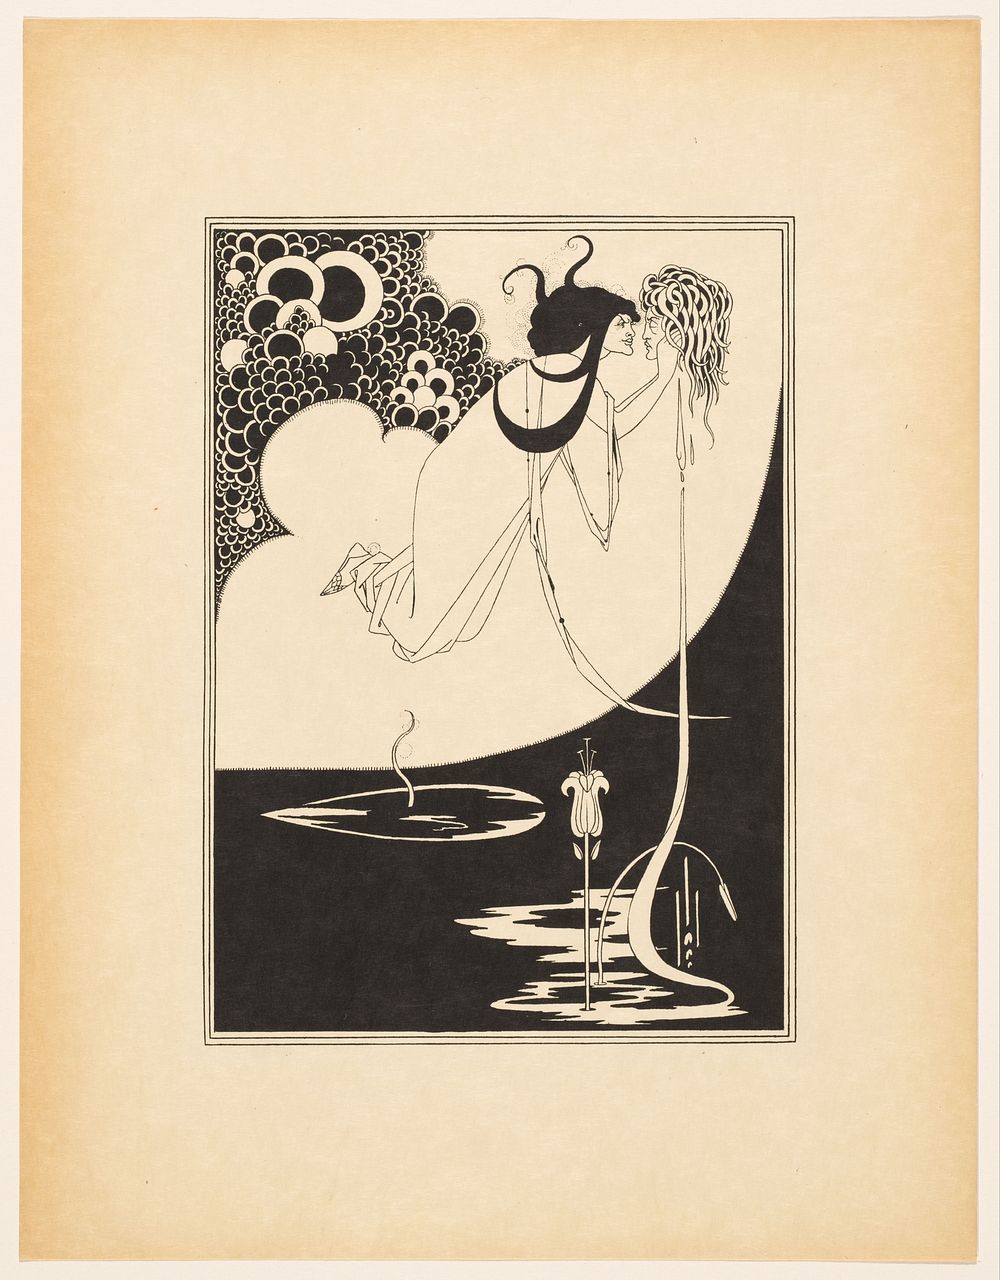 The Climax (1893 - 1906) by Aubrey Beardsley